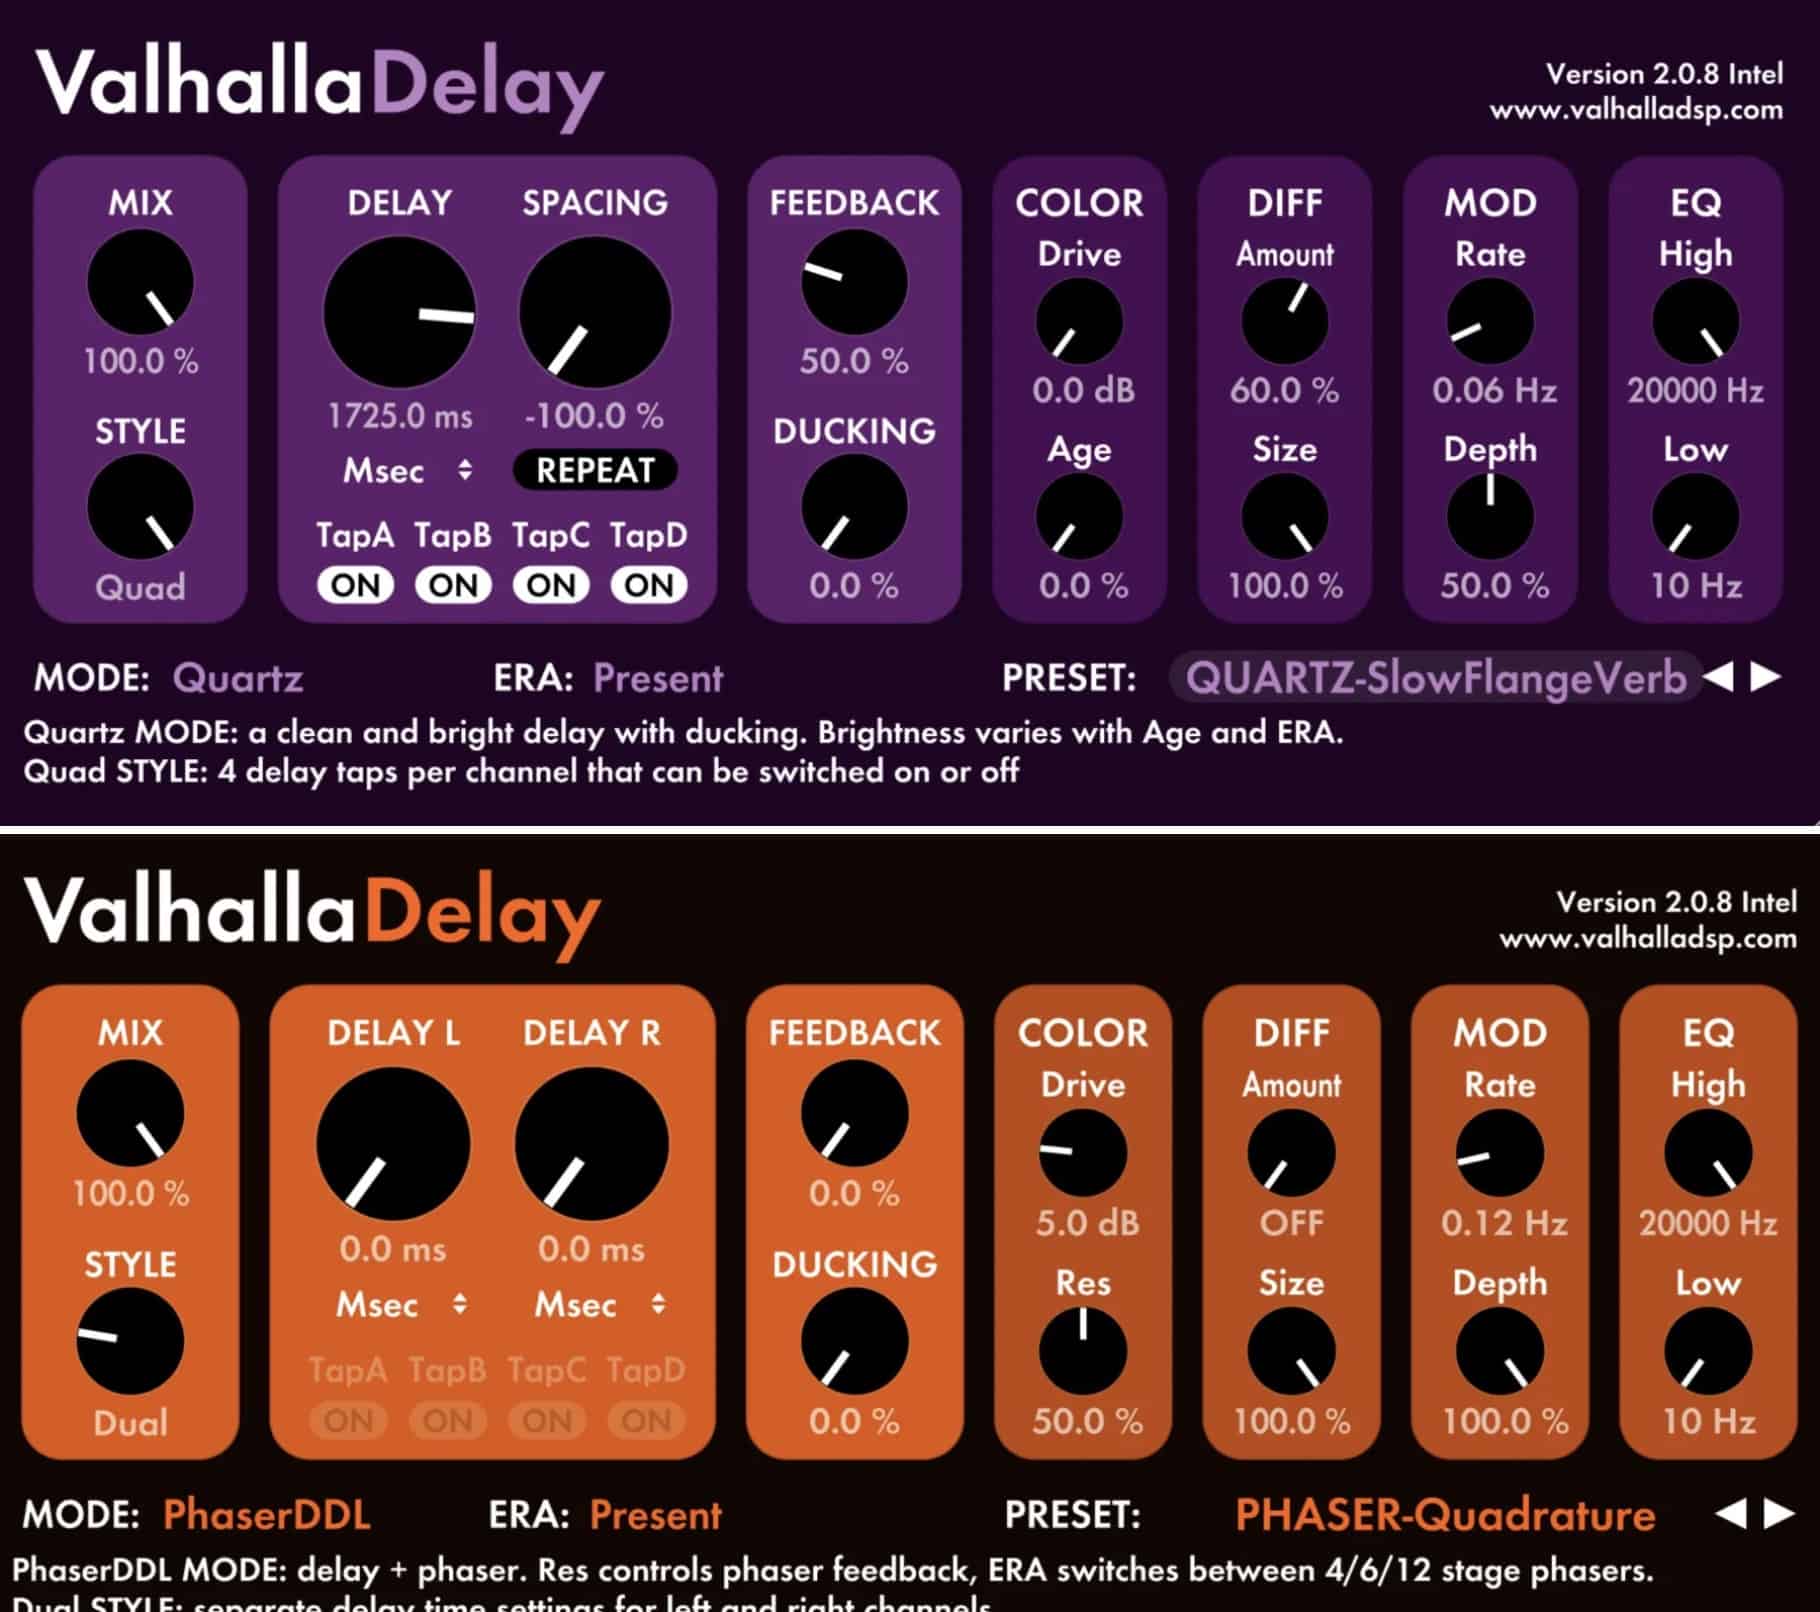 ValhallaDelay Updated Adds New Quartz and PhaserDDL Modes